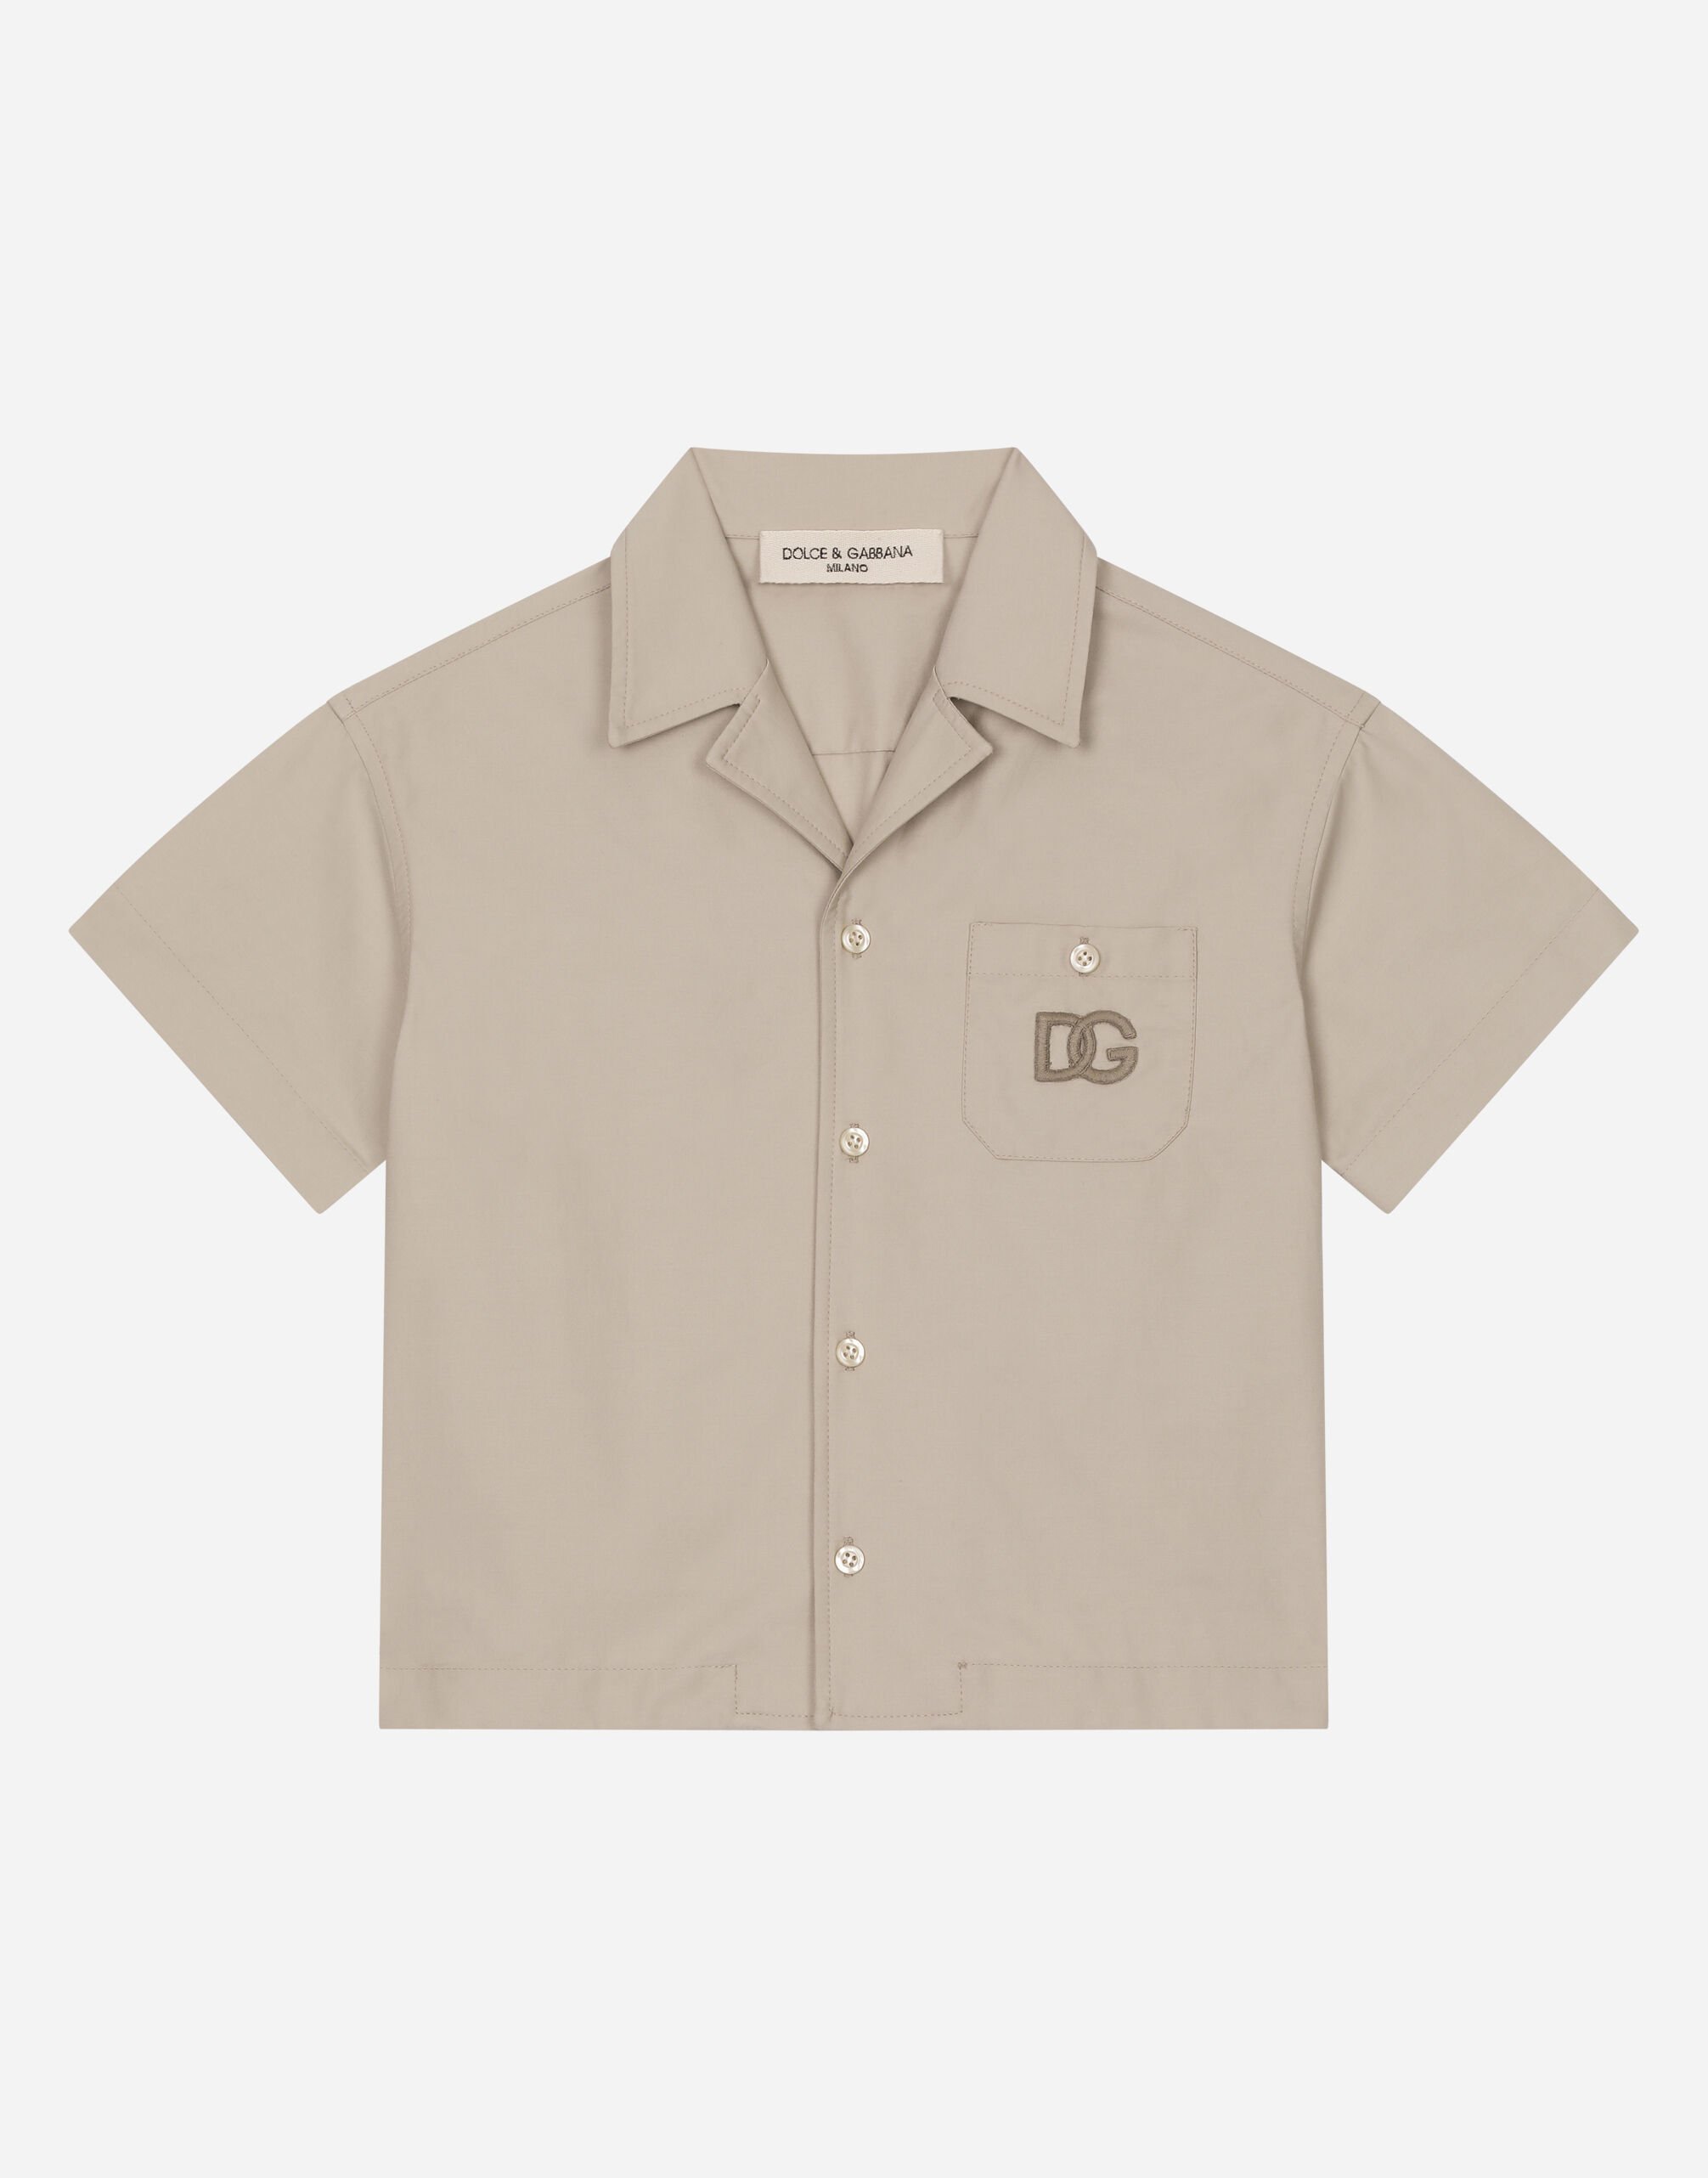 Dolce & Gabbana Drill shirt with DG logo patch Print L43S86G7L5W